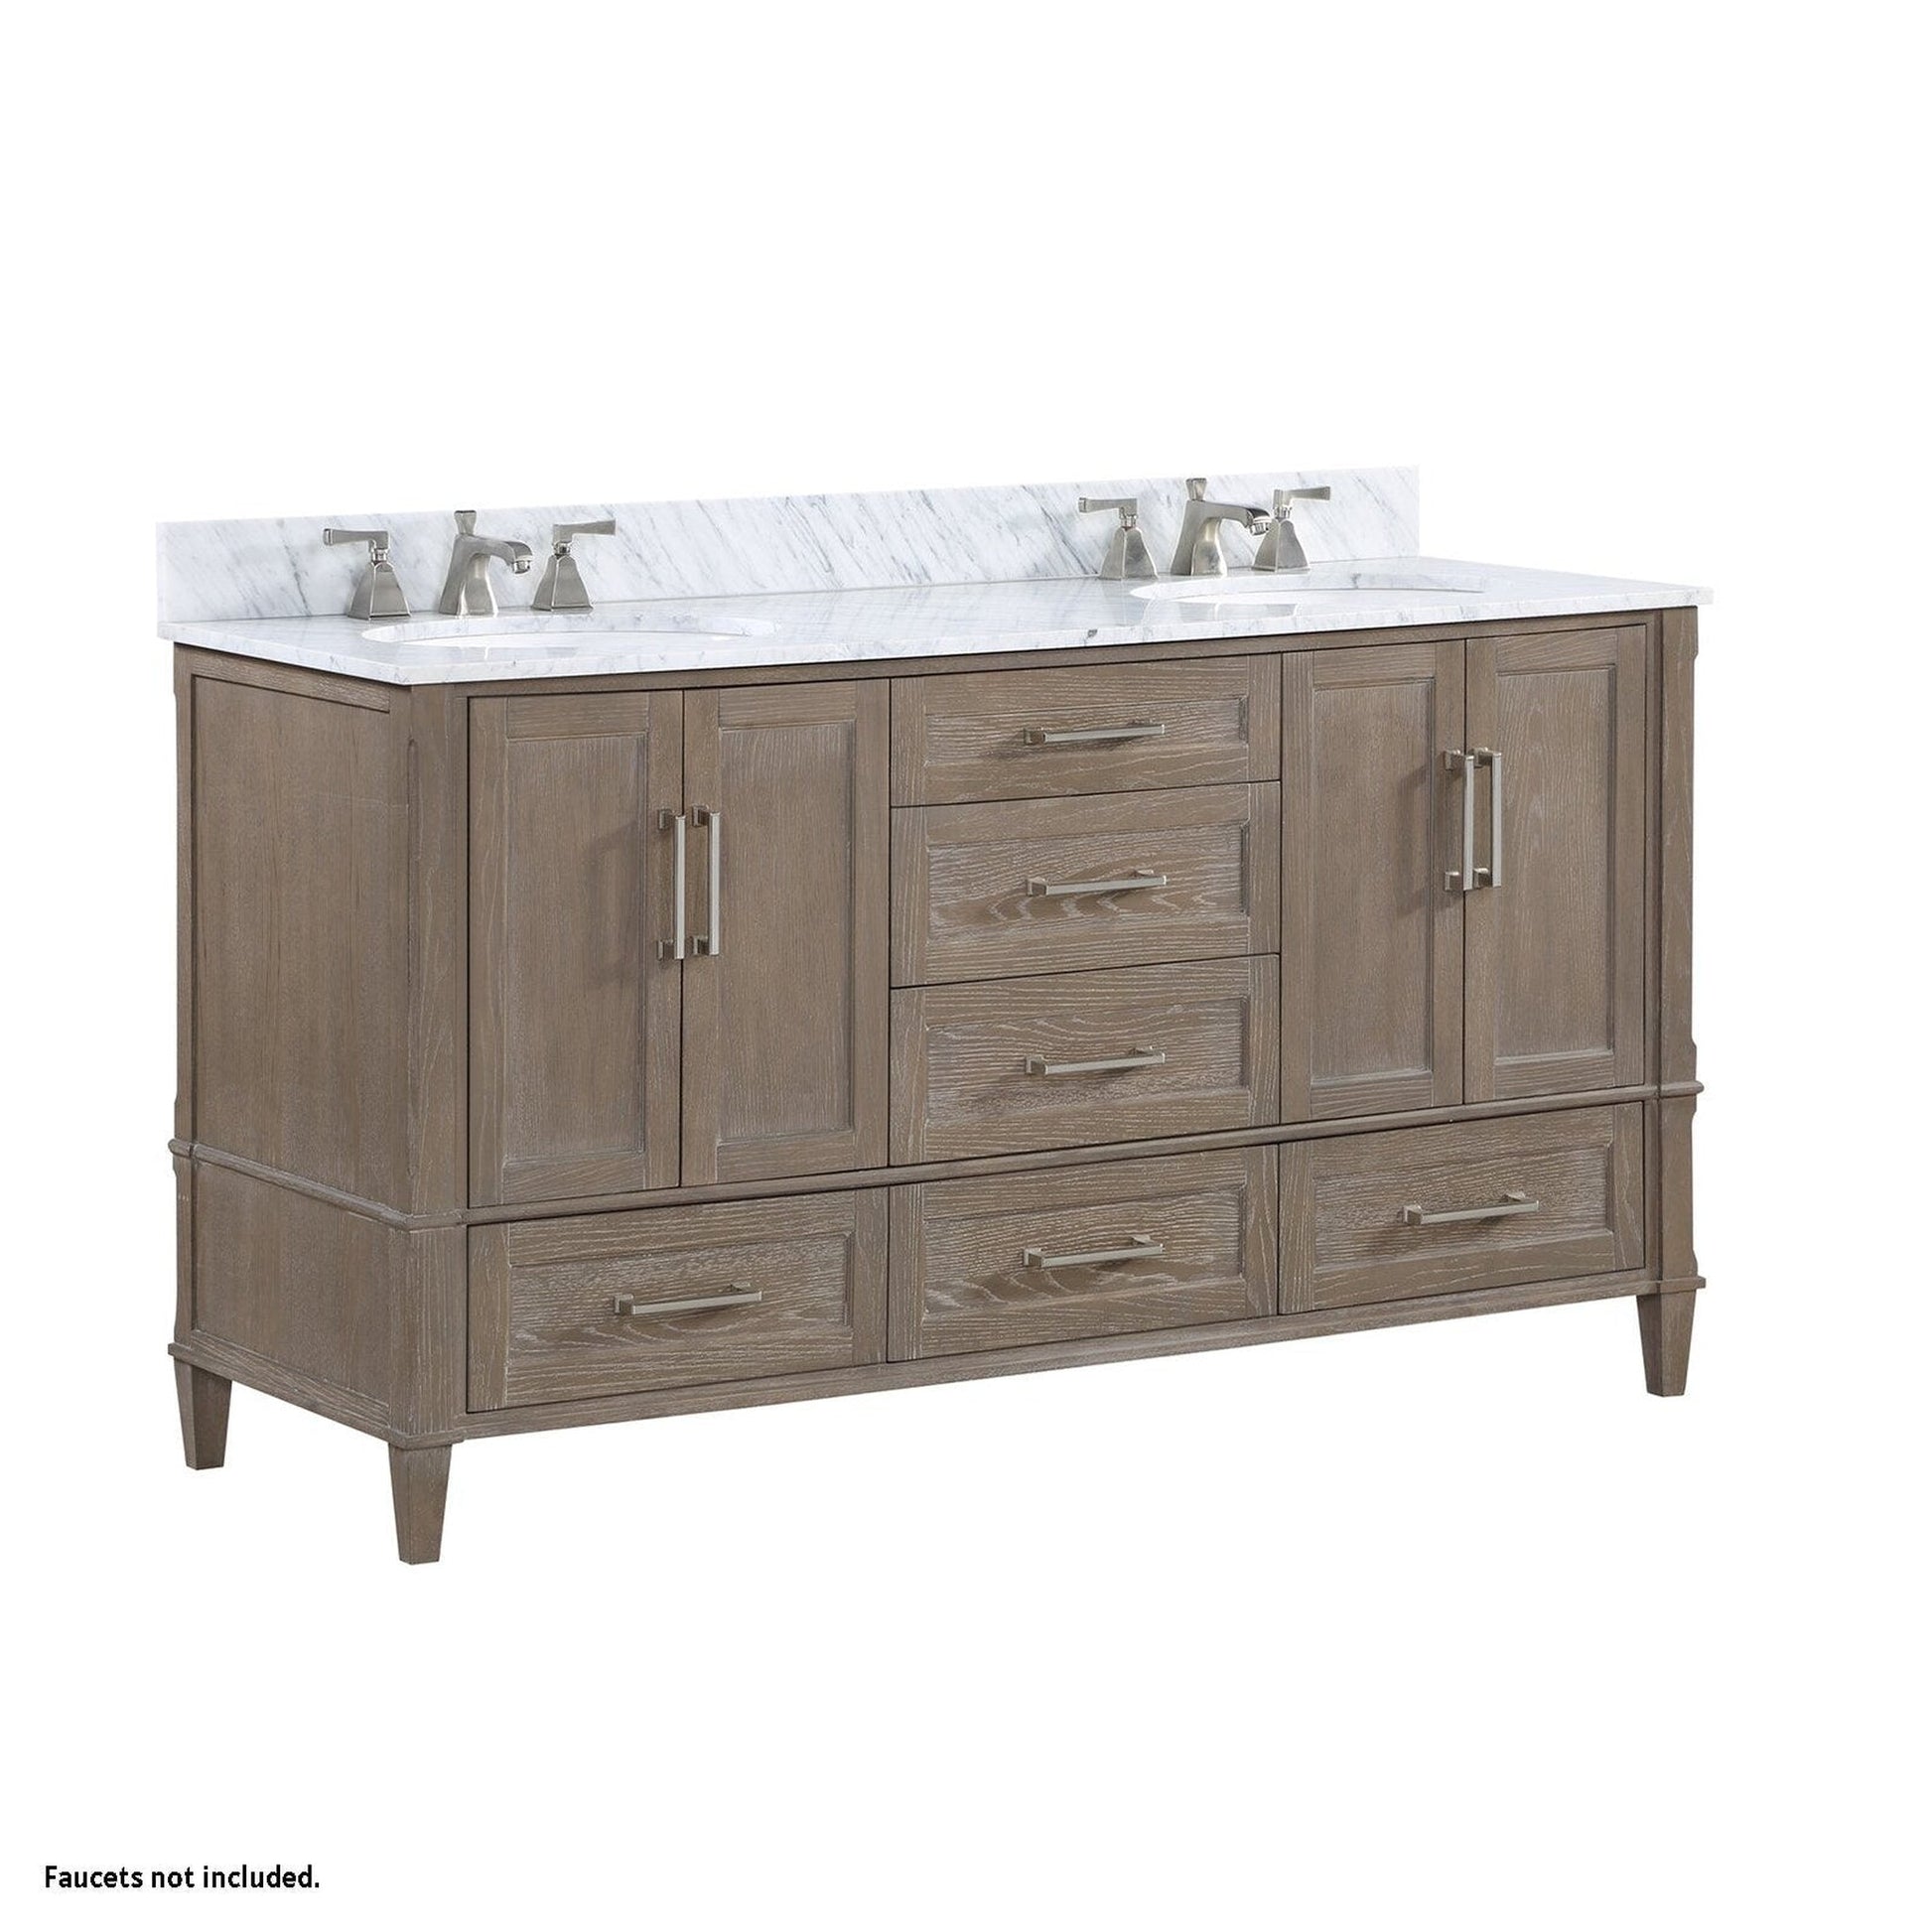 Bemma Design Montauk 60" Age Light Oak Solid Wood Freestanding Bathroom Vanity With Double 3-Hole Italian Carra Marble Vanity Top, Oval Undermount Sink, and Backsplash